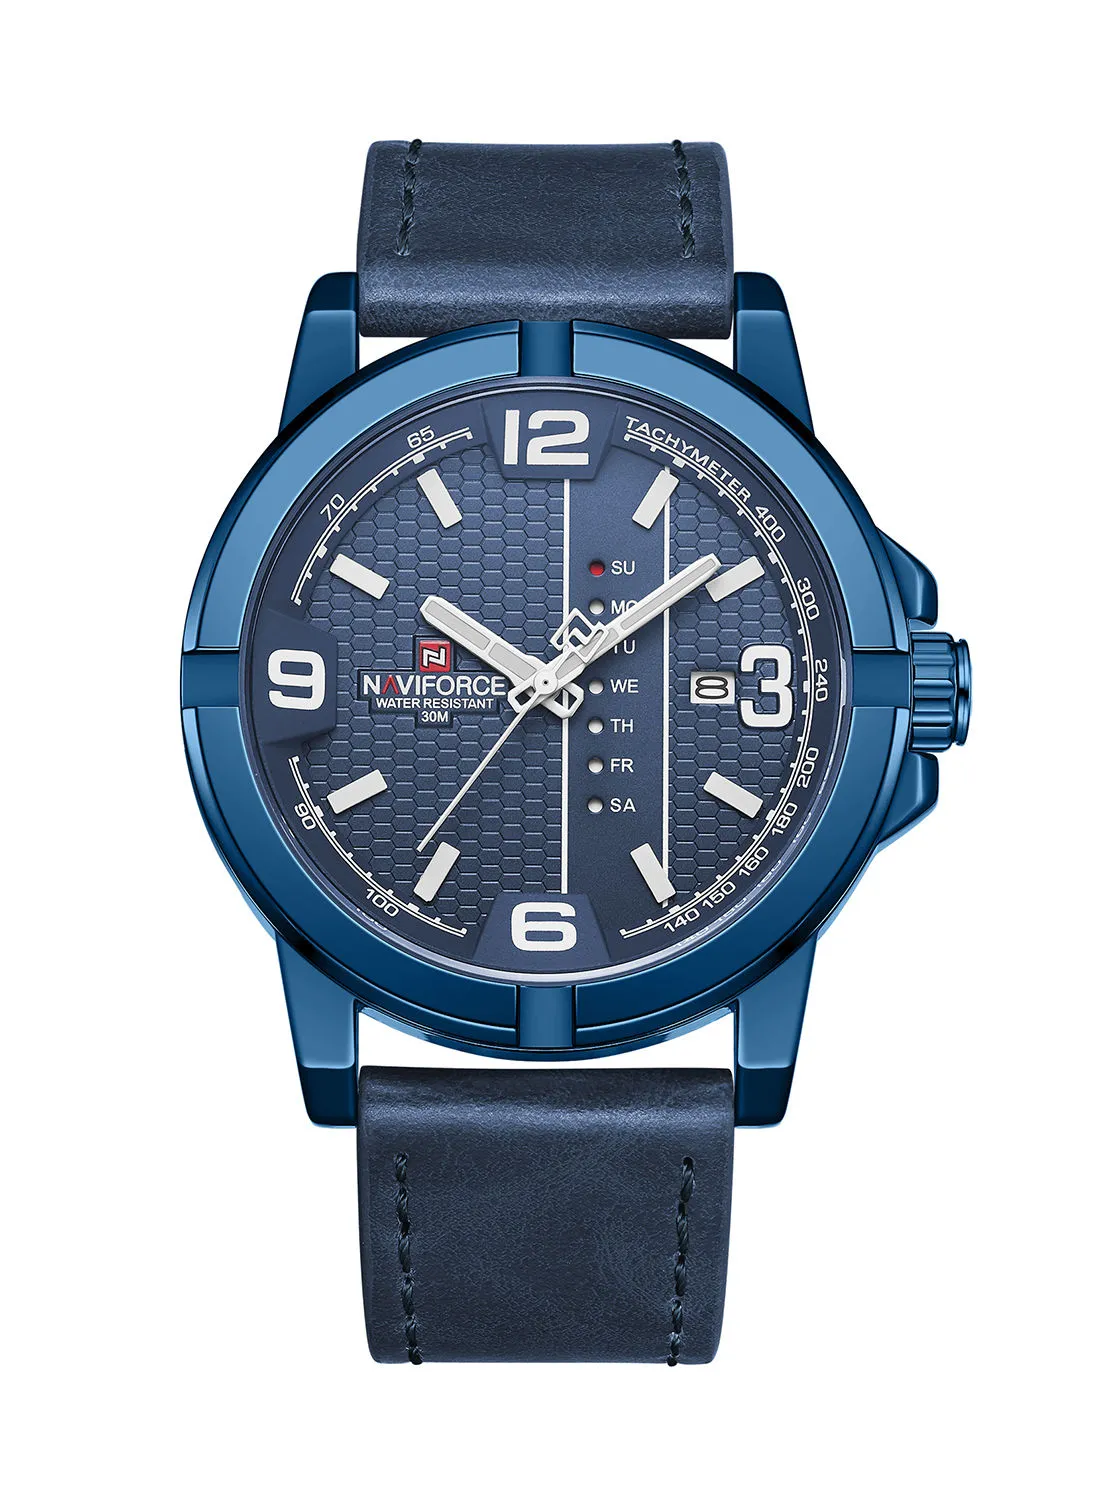 NAVIFORCE Men's Leather Analog & Digital Wrist Watch NF9177 BE/W/BE - 45 mm - Blue